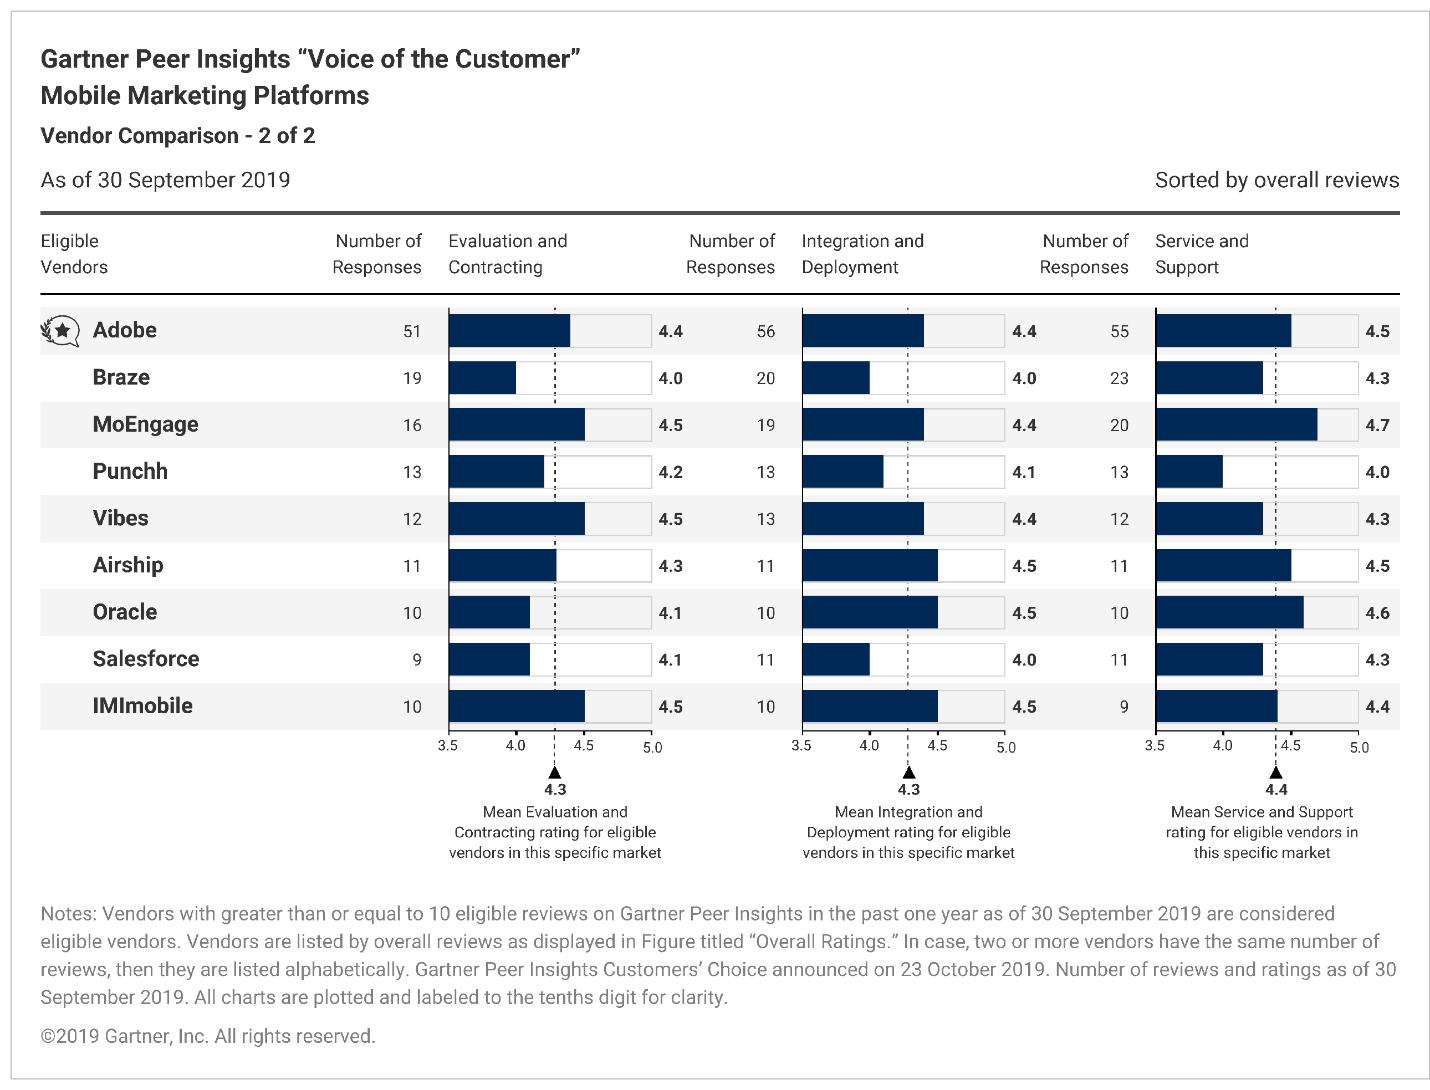 Vendor Comparison 2 of 2 - Gartner Peer Insights ‘Voice of the Customer’ Report for Mobile Marketing Platforms.